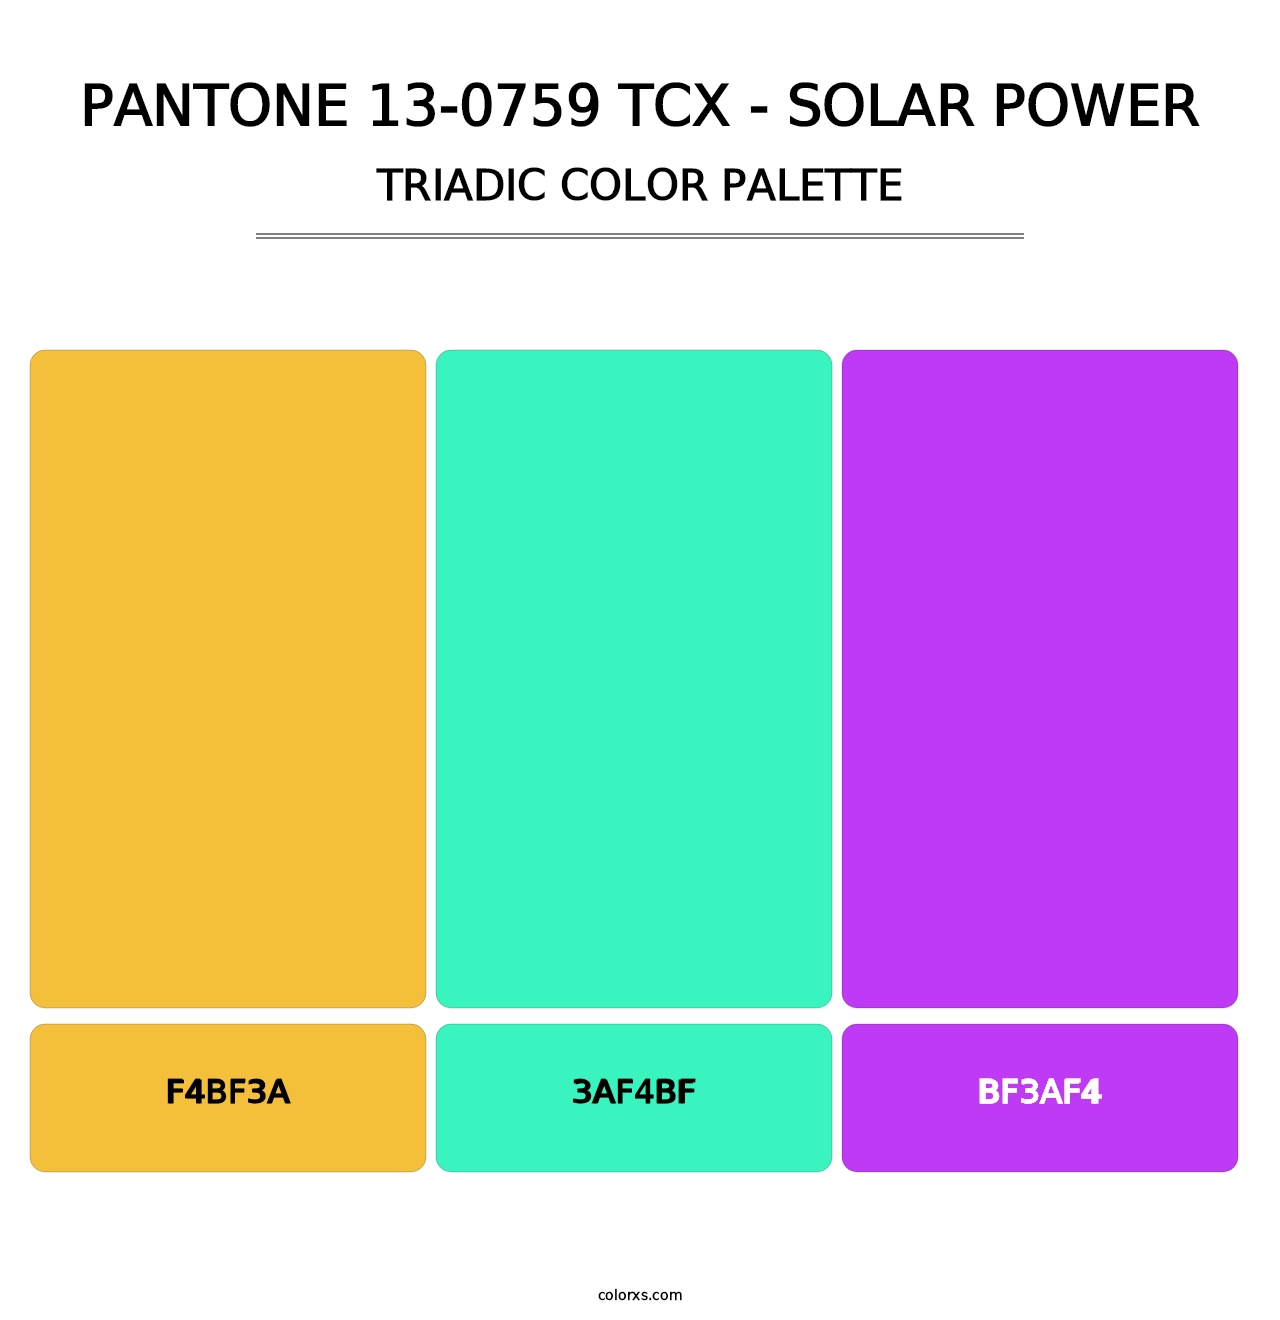 PANTONE 13-0759 TCX - Solar Power - Triadic Color Palette